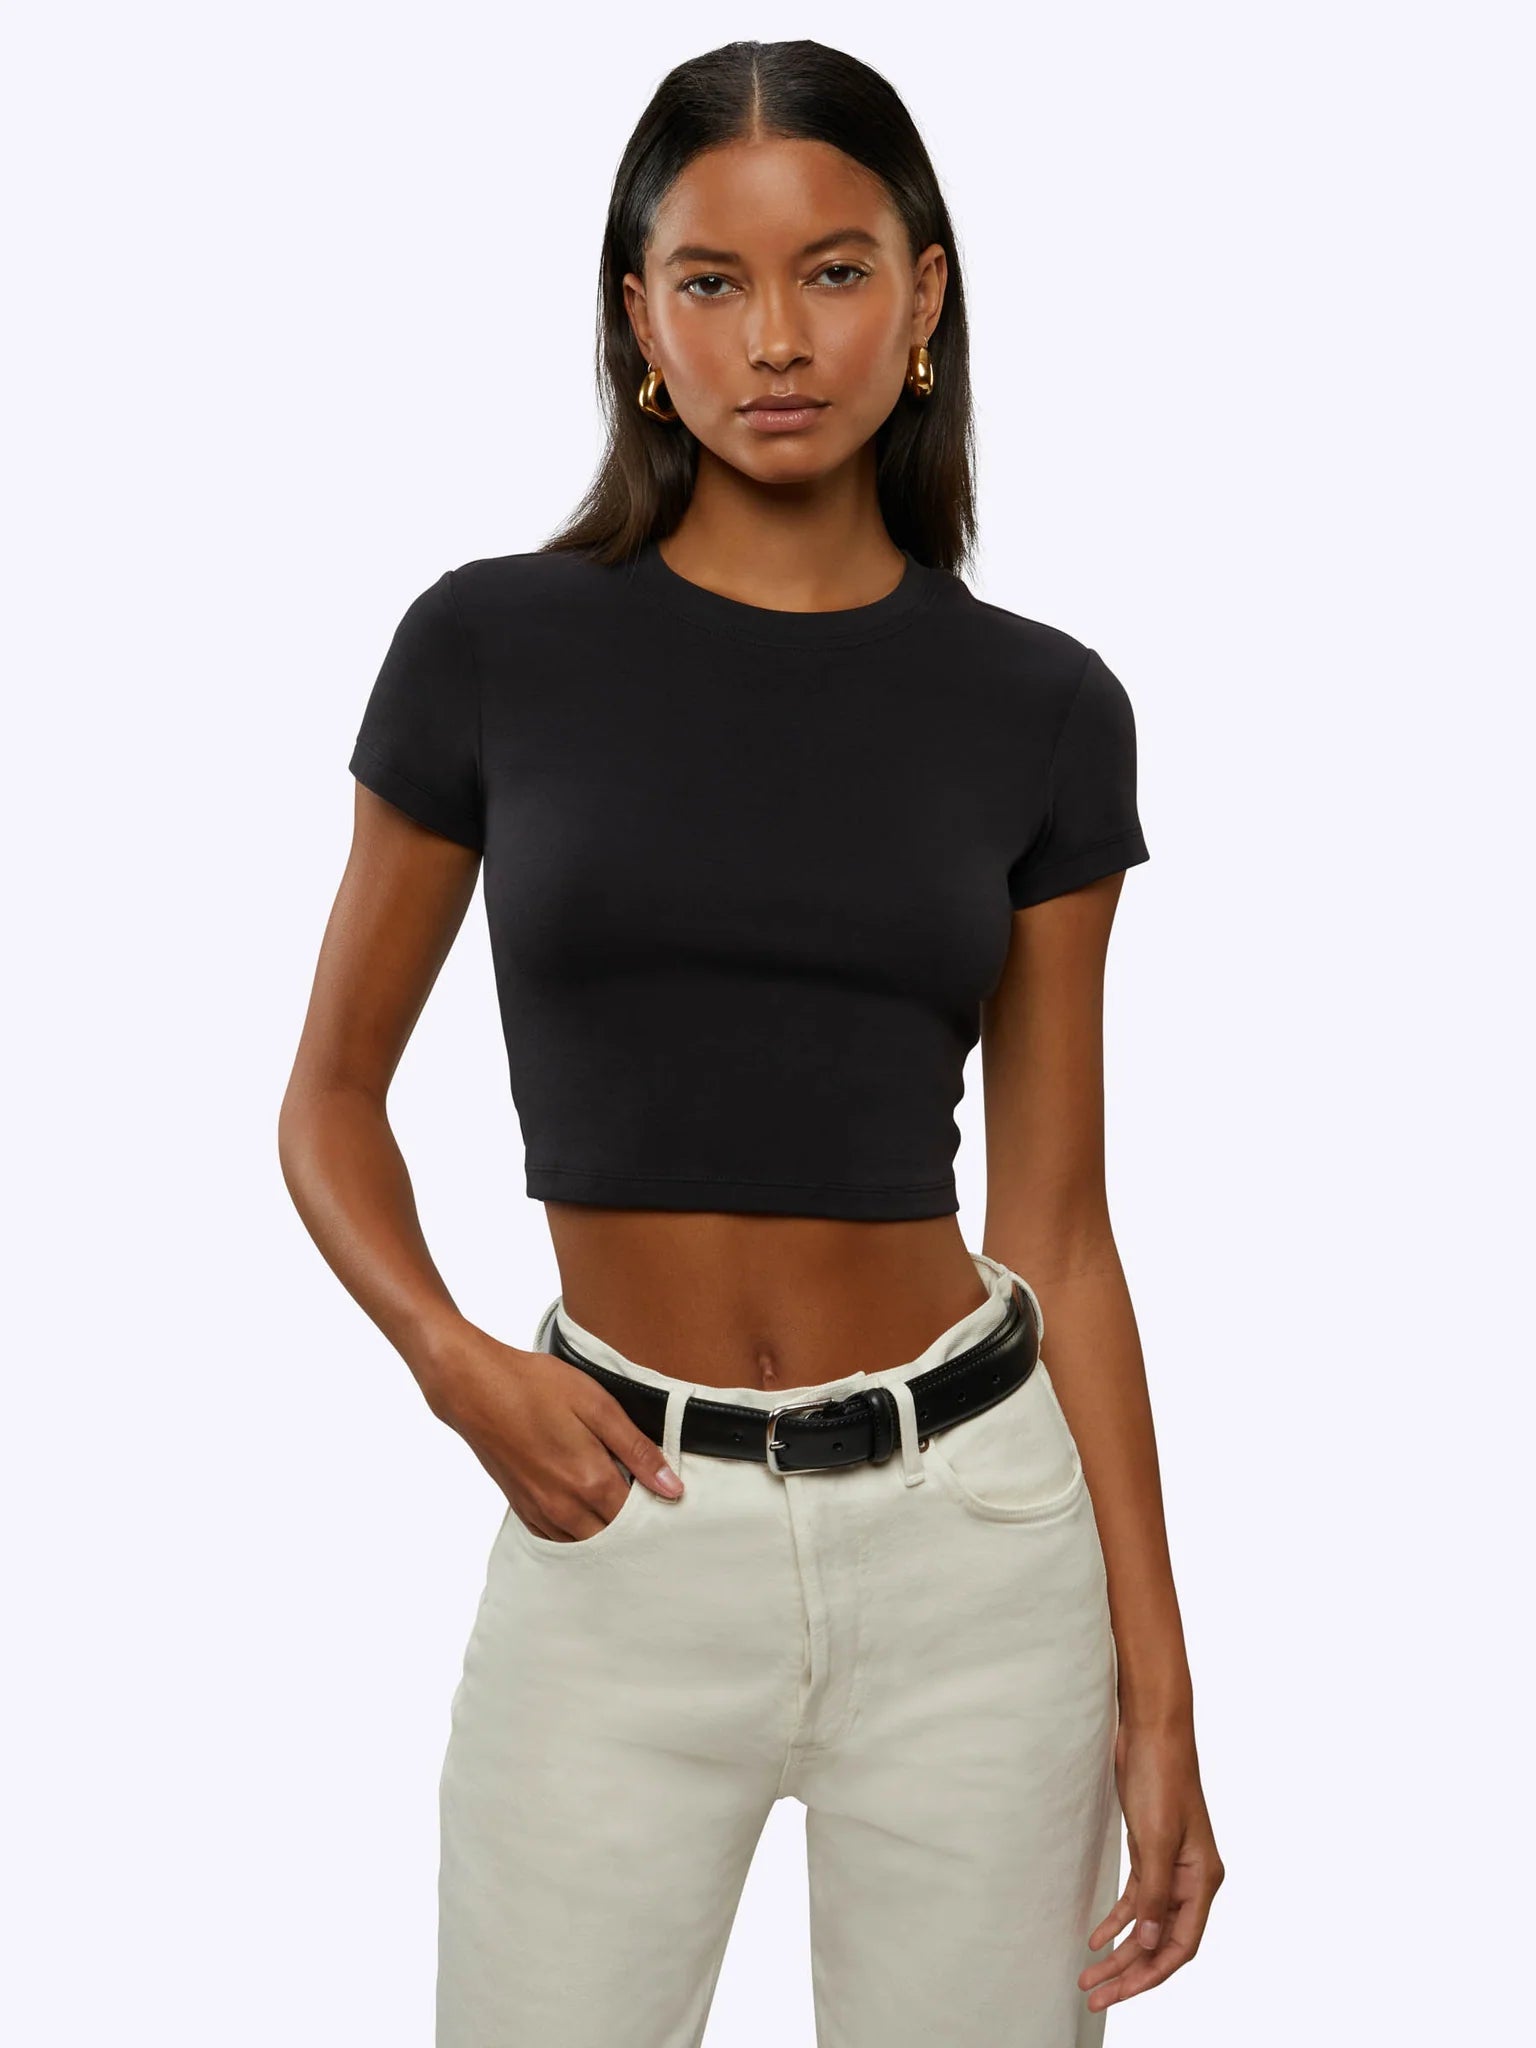 Black Cropped tee shirt on model 